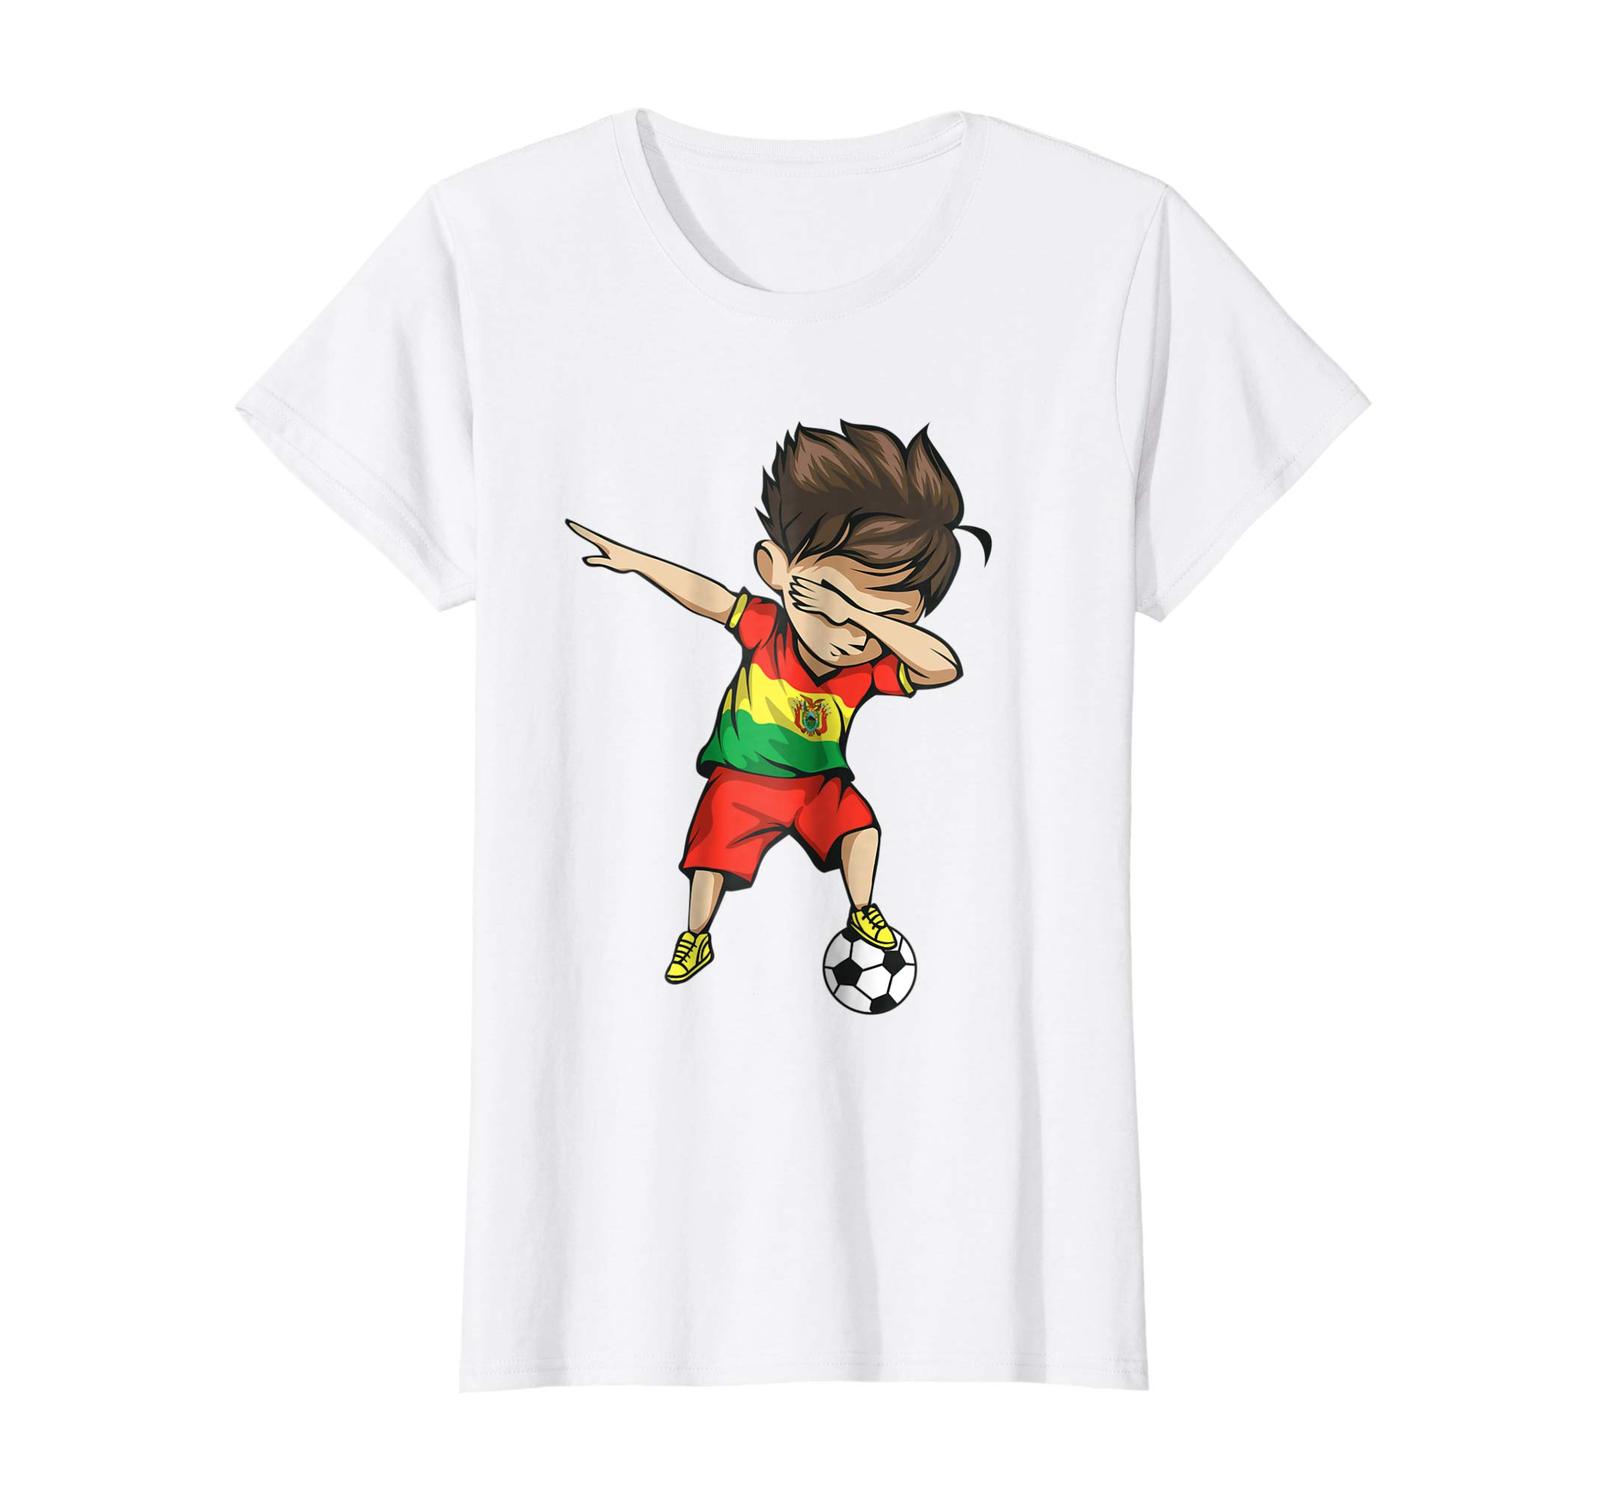 Sport Shirts - Dabbing Soccer Boy Bolivia Jersey Shirt - Bolivian Football Wowen - $19.95 - $23.95